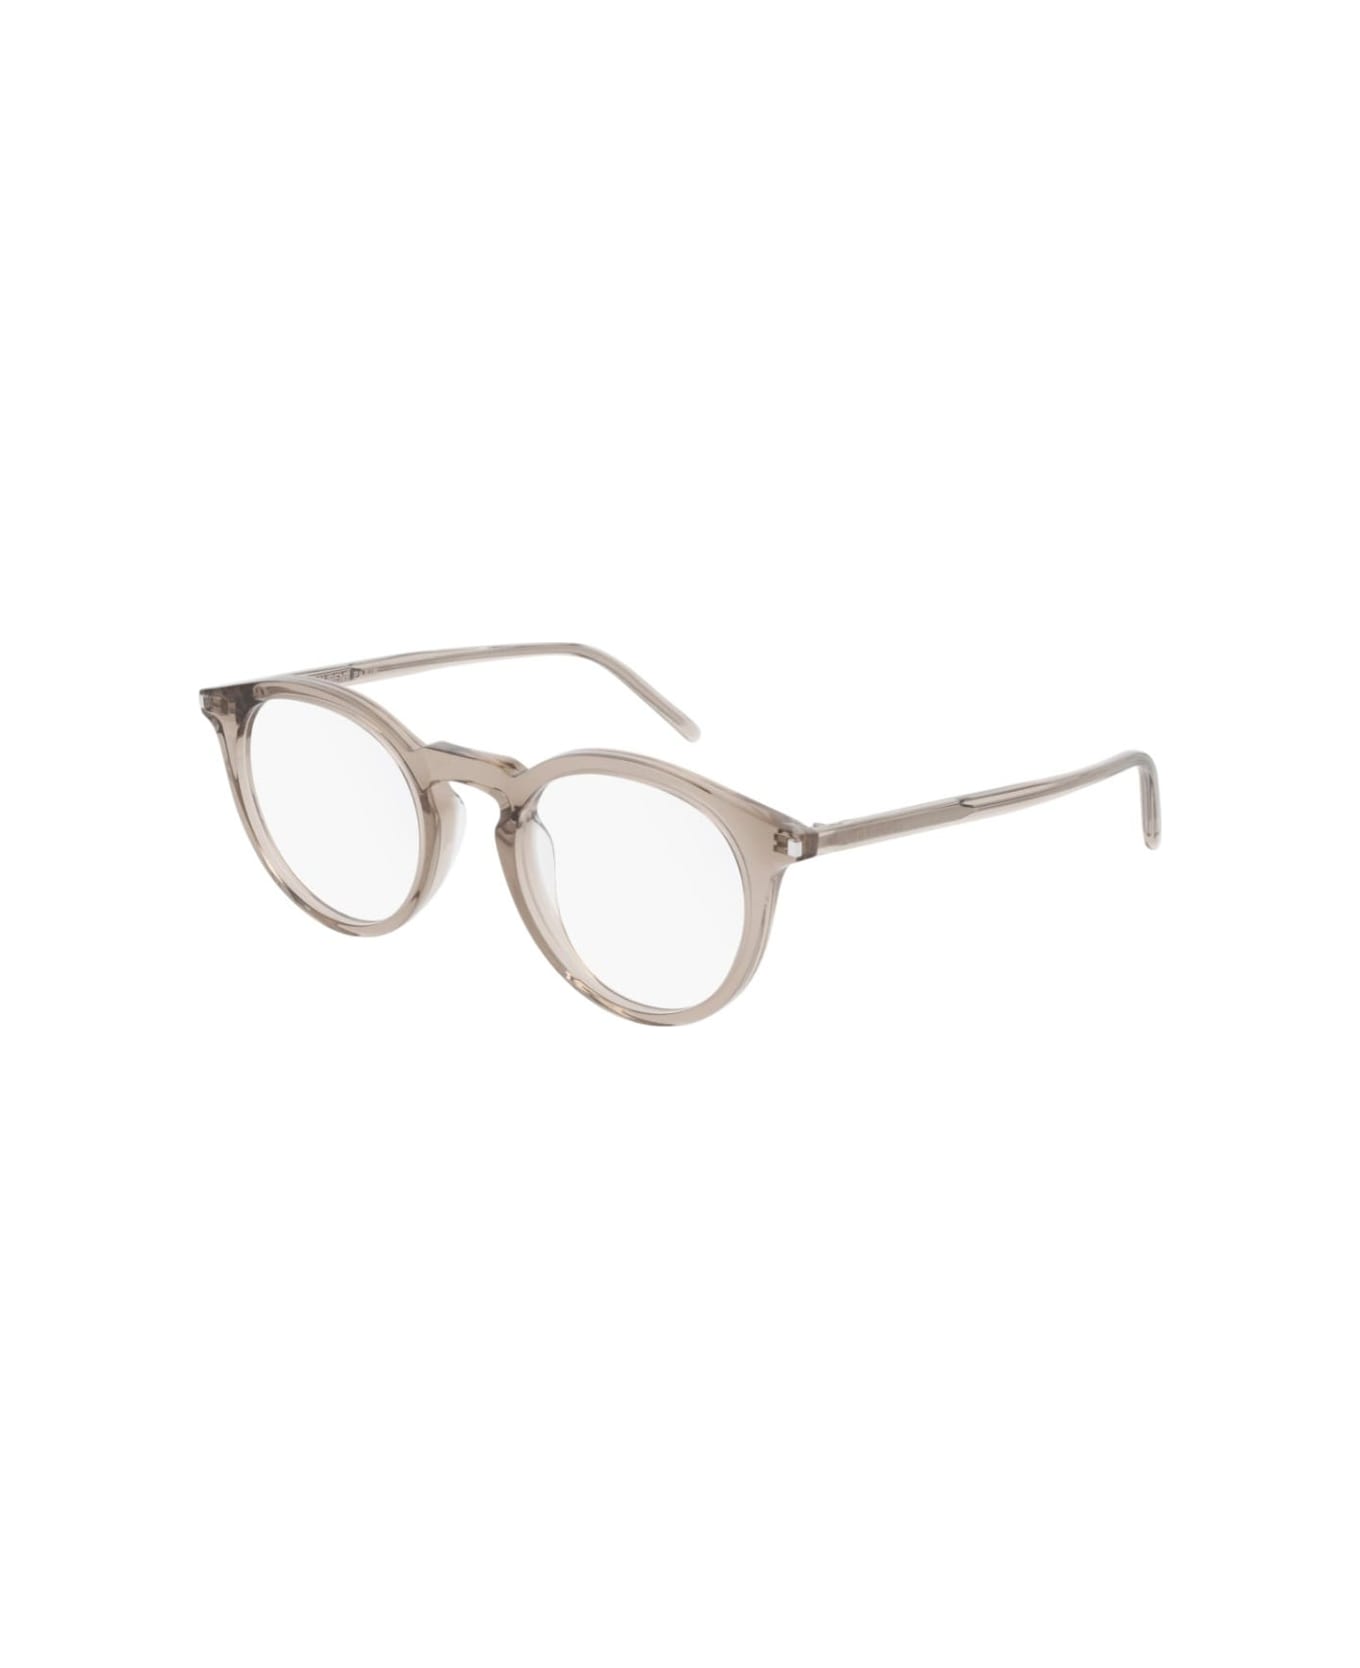 Saint Laurent Eyewear SL347 004 Glasses - Tortora アイウェア